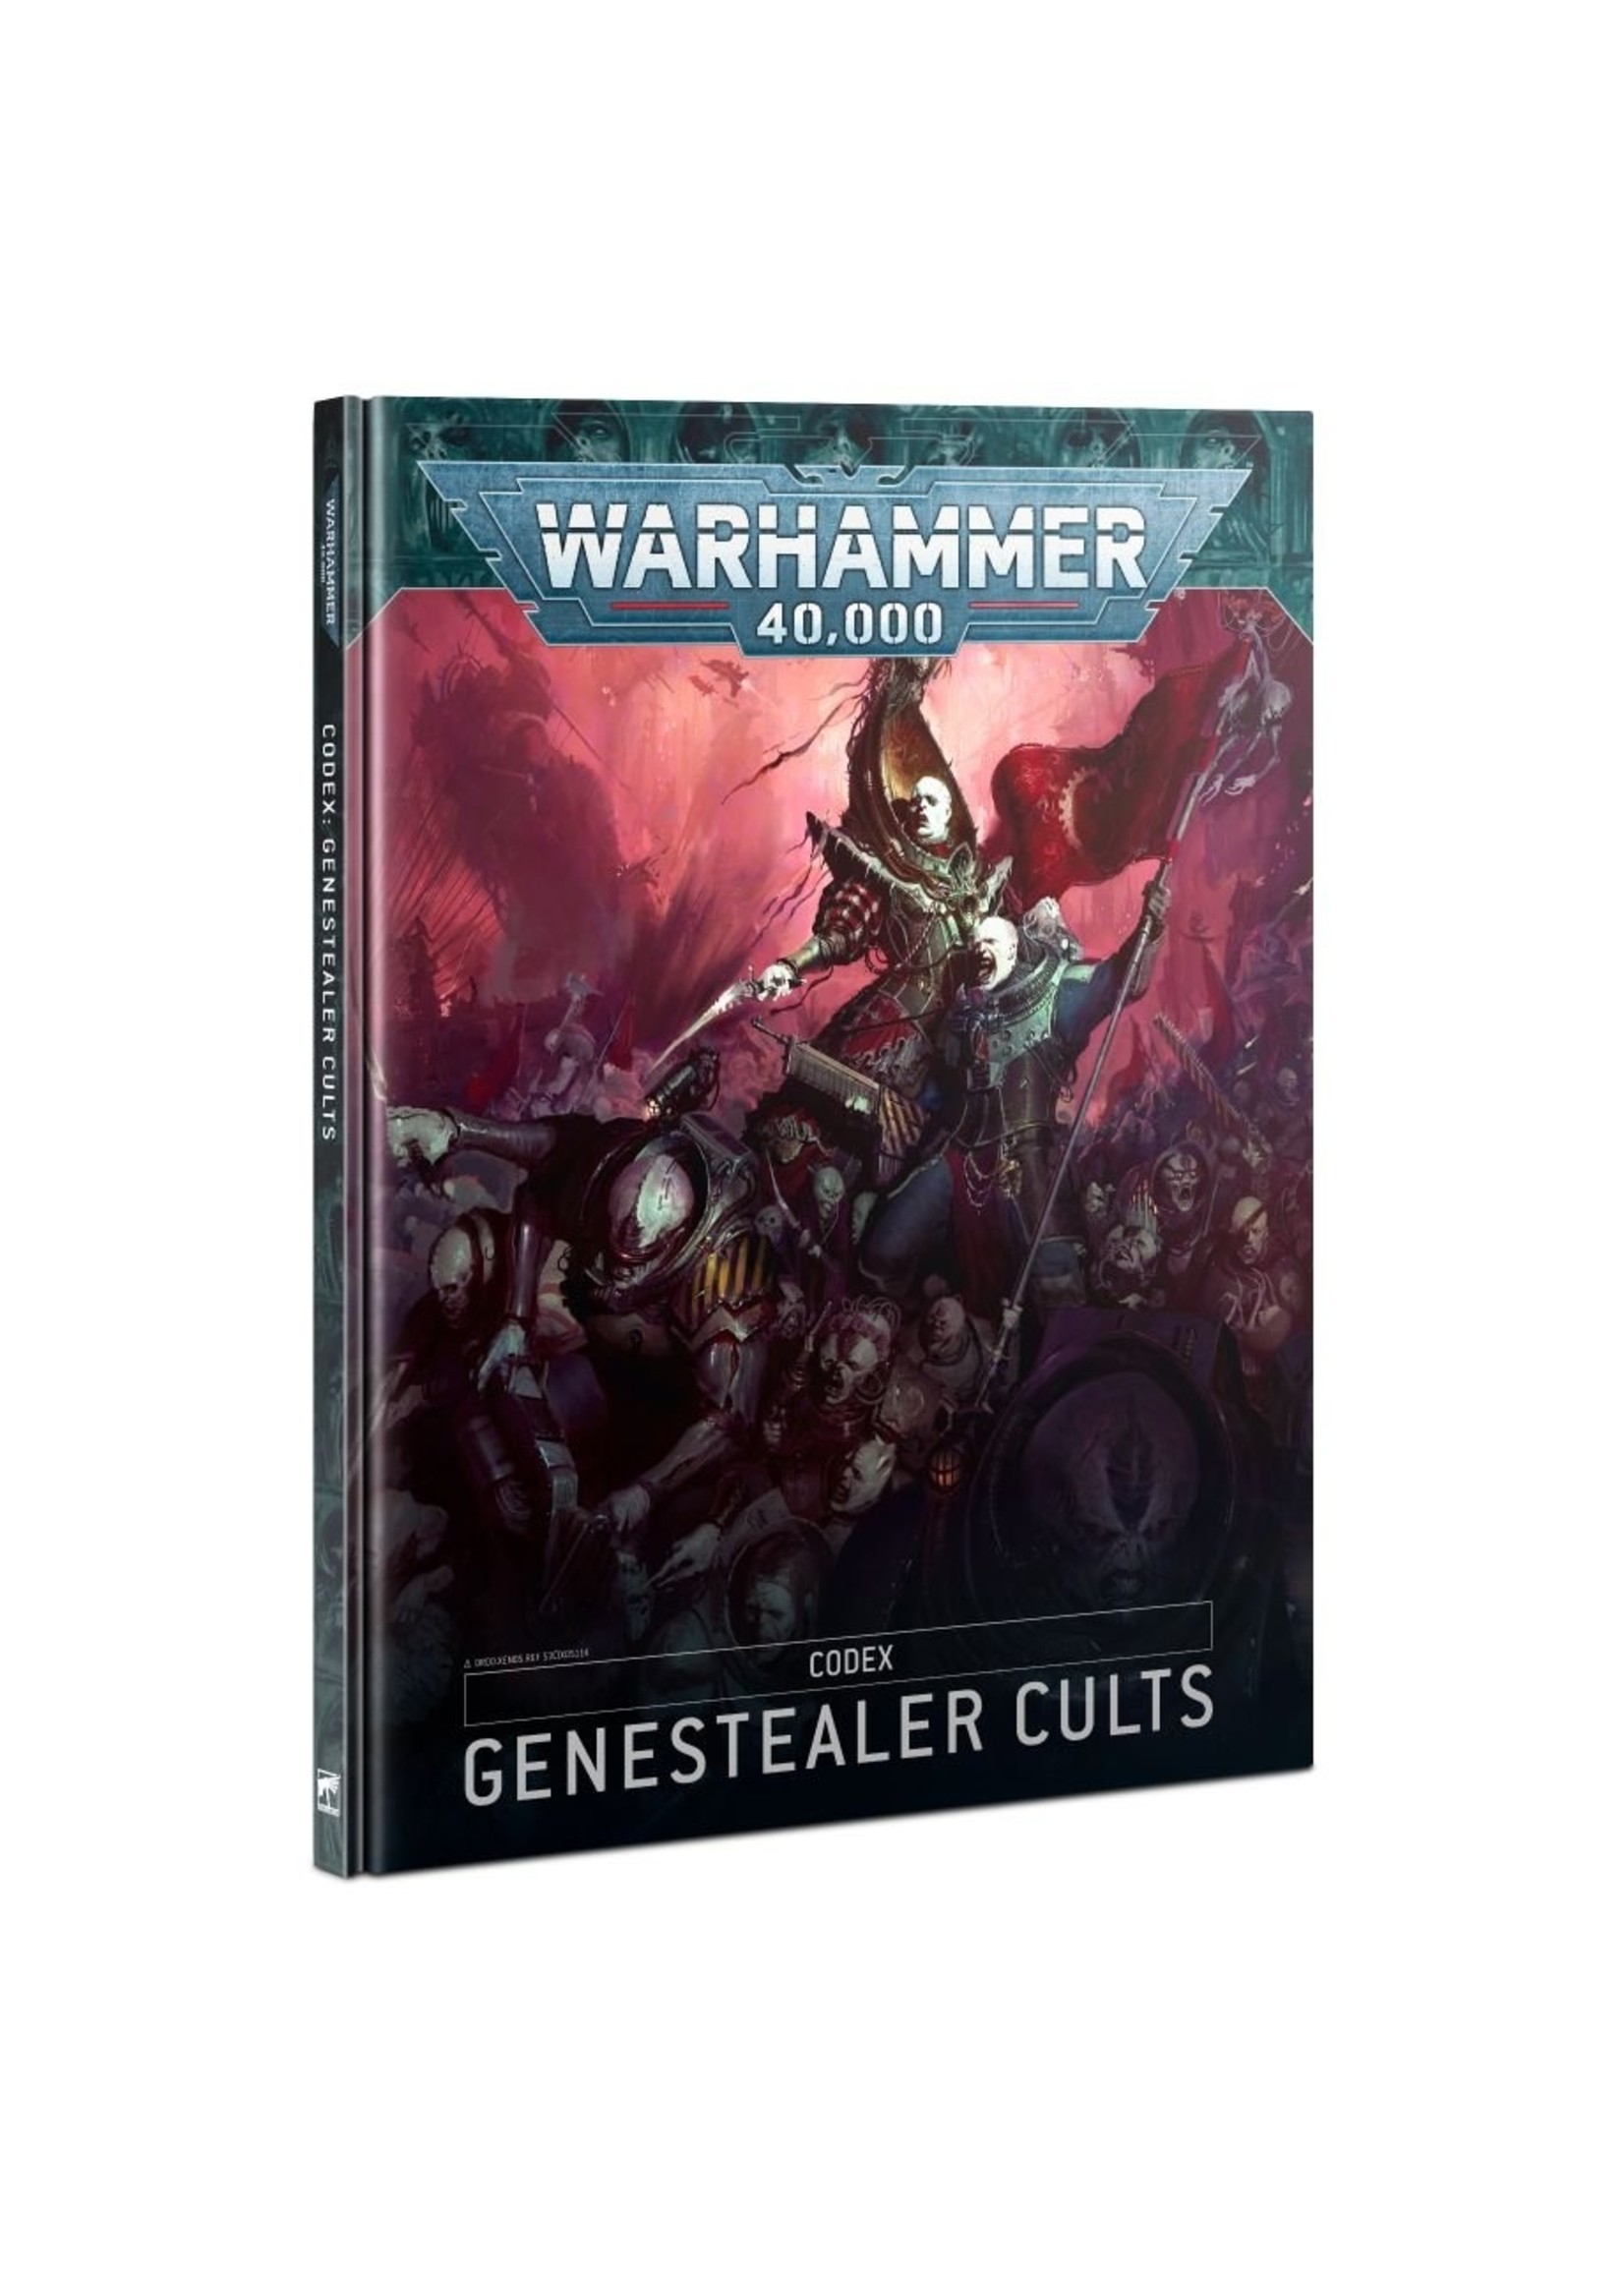 Warhammer 40K: Codex - Genestealer Cults